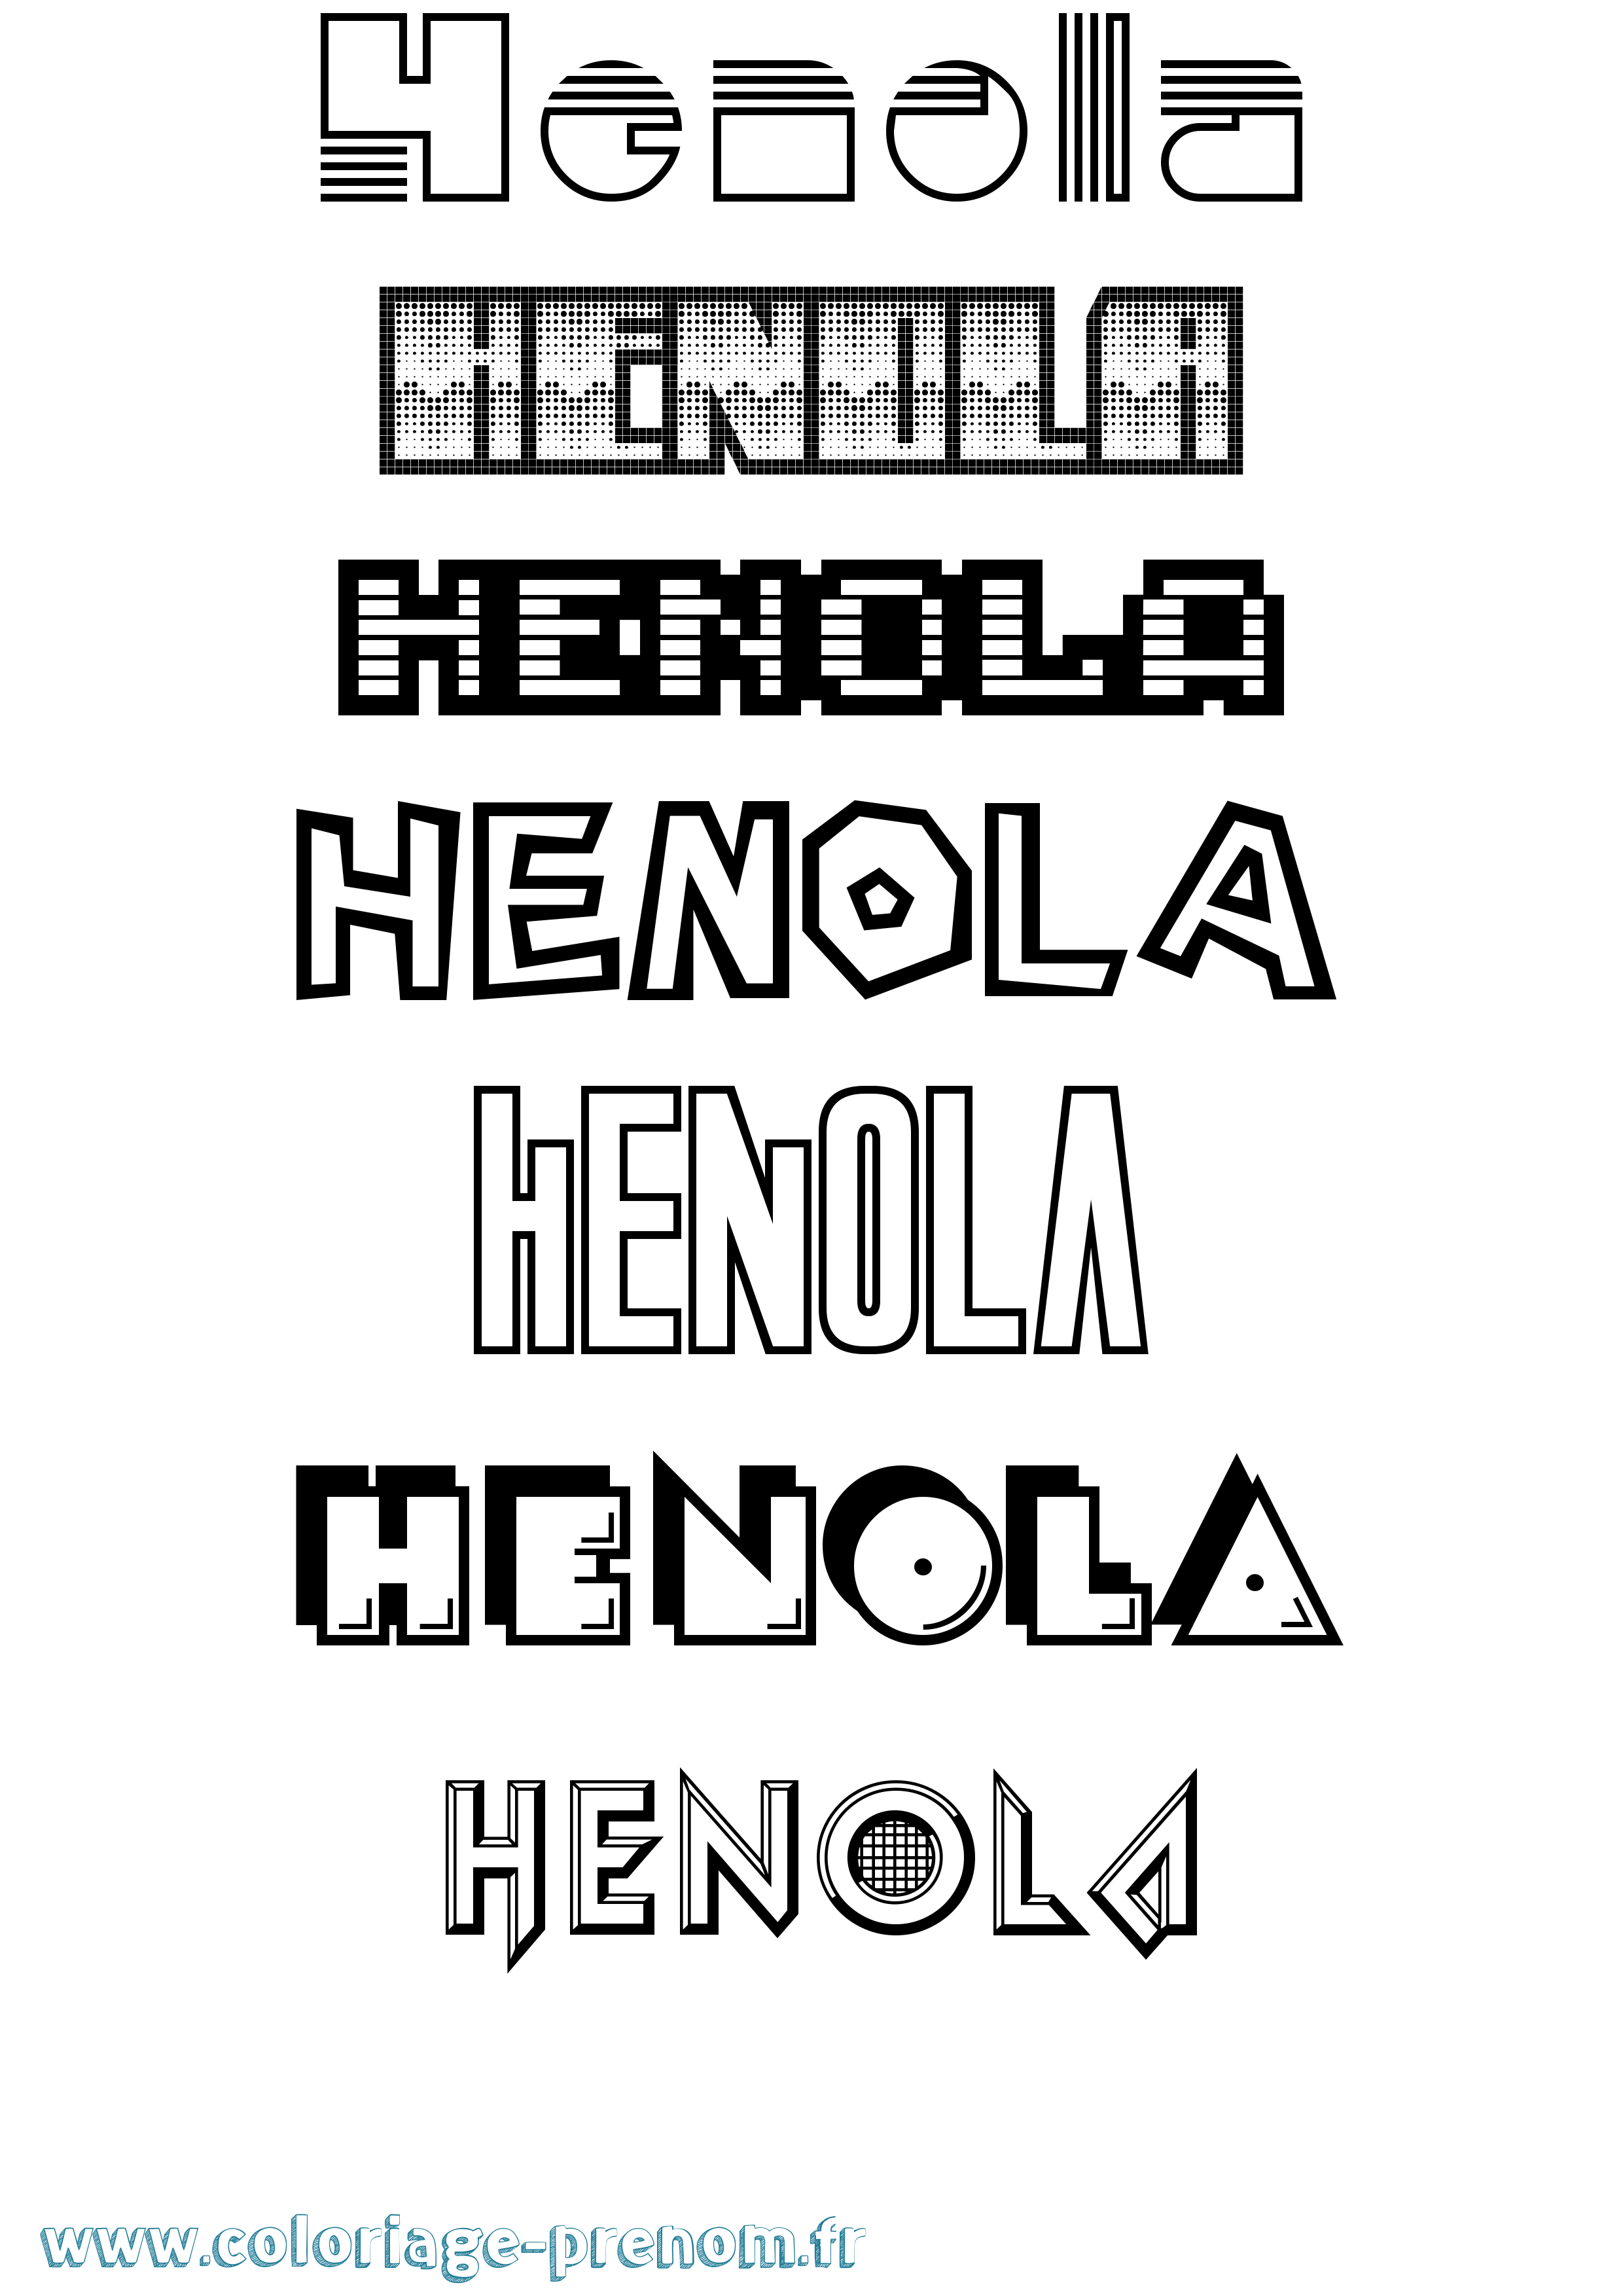 Coloriage prénom Henola Jeux Vidéos